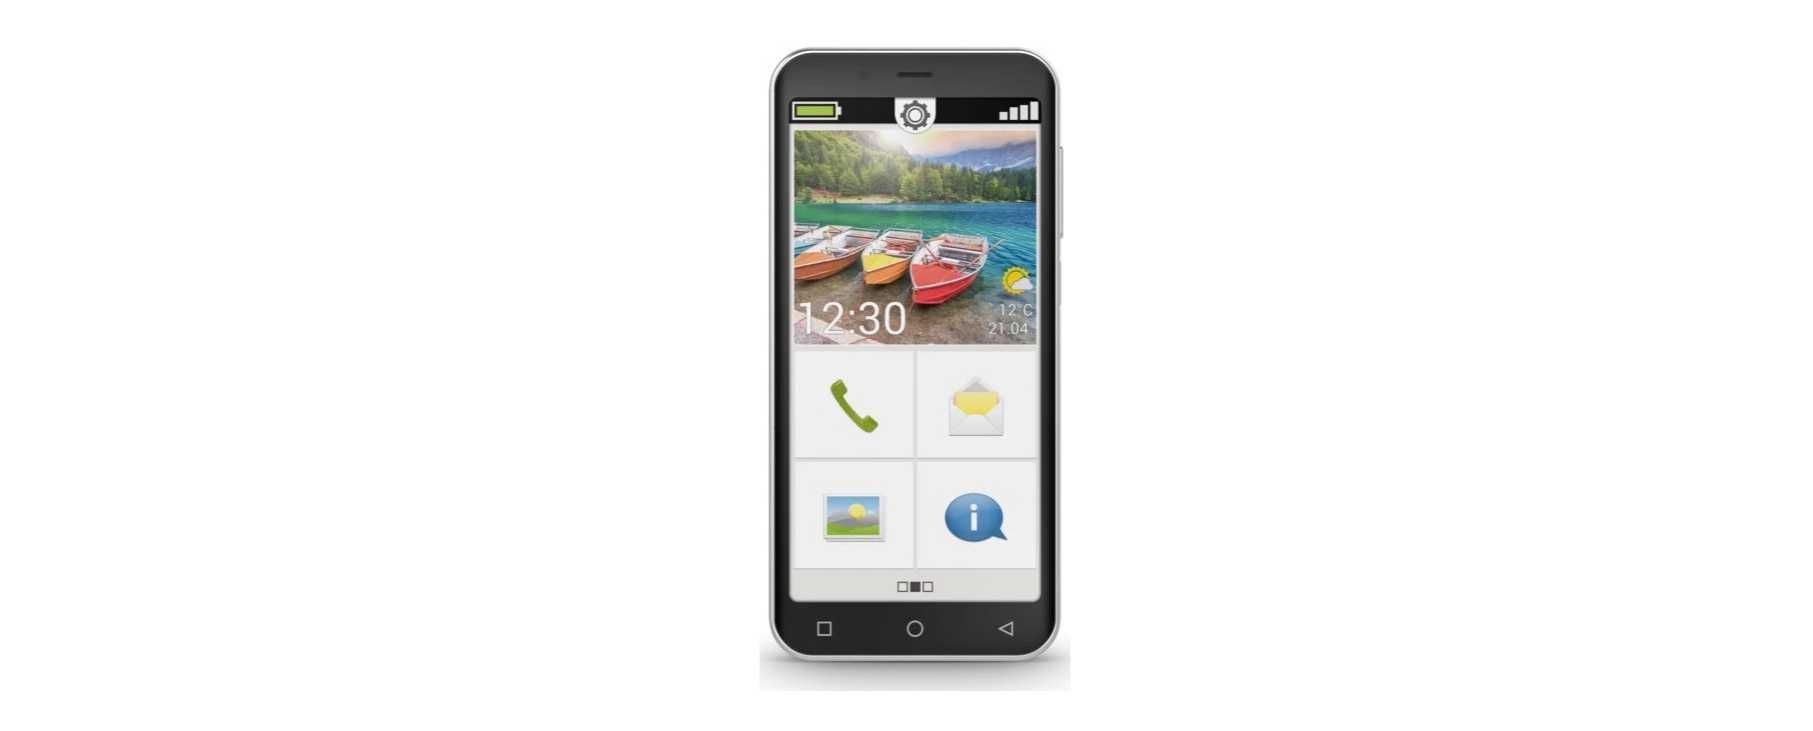 Smartfon Emporia Smart 5 mini 4GB/64GB